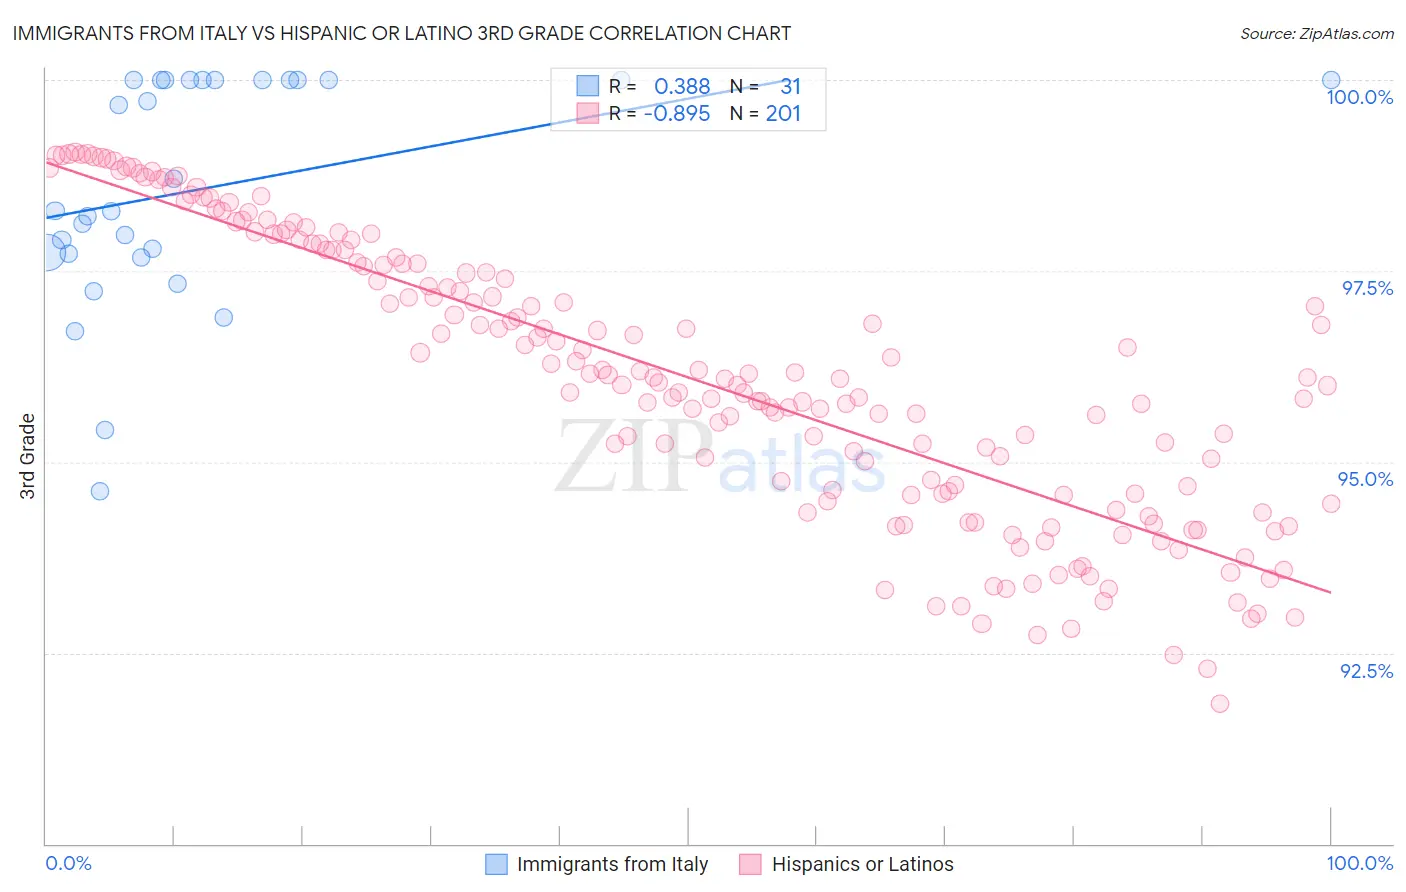 Immigrants from Italy vs Hispanic or Latino 3rd Grade